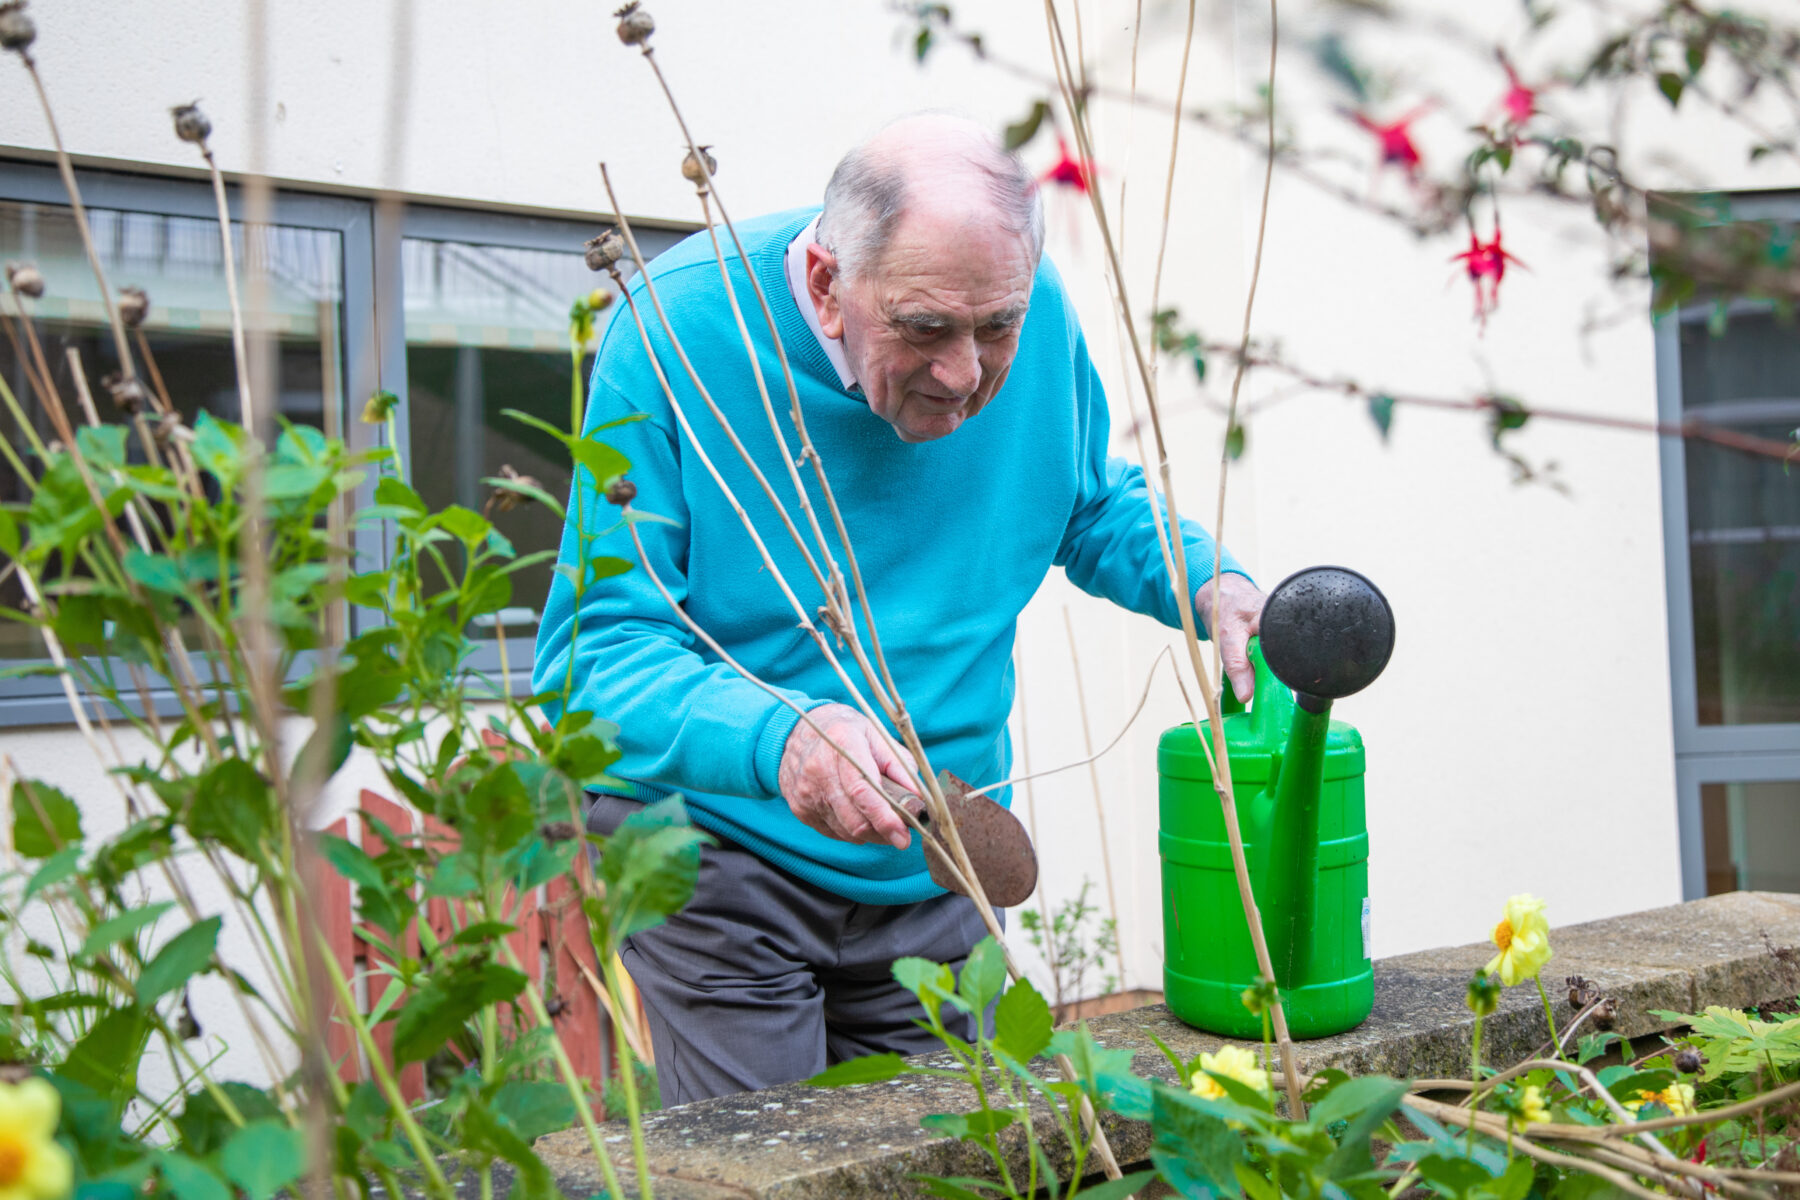 One of the Llys Awelon residents gardening